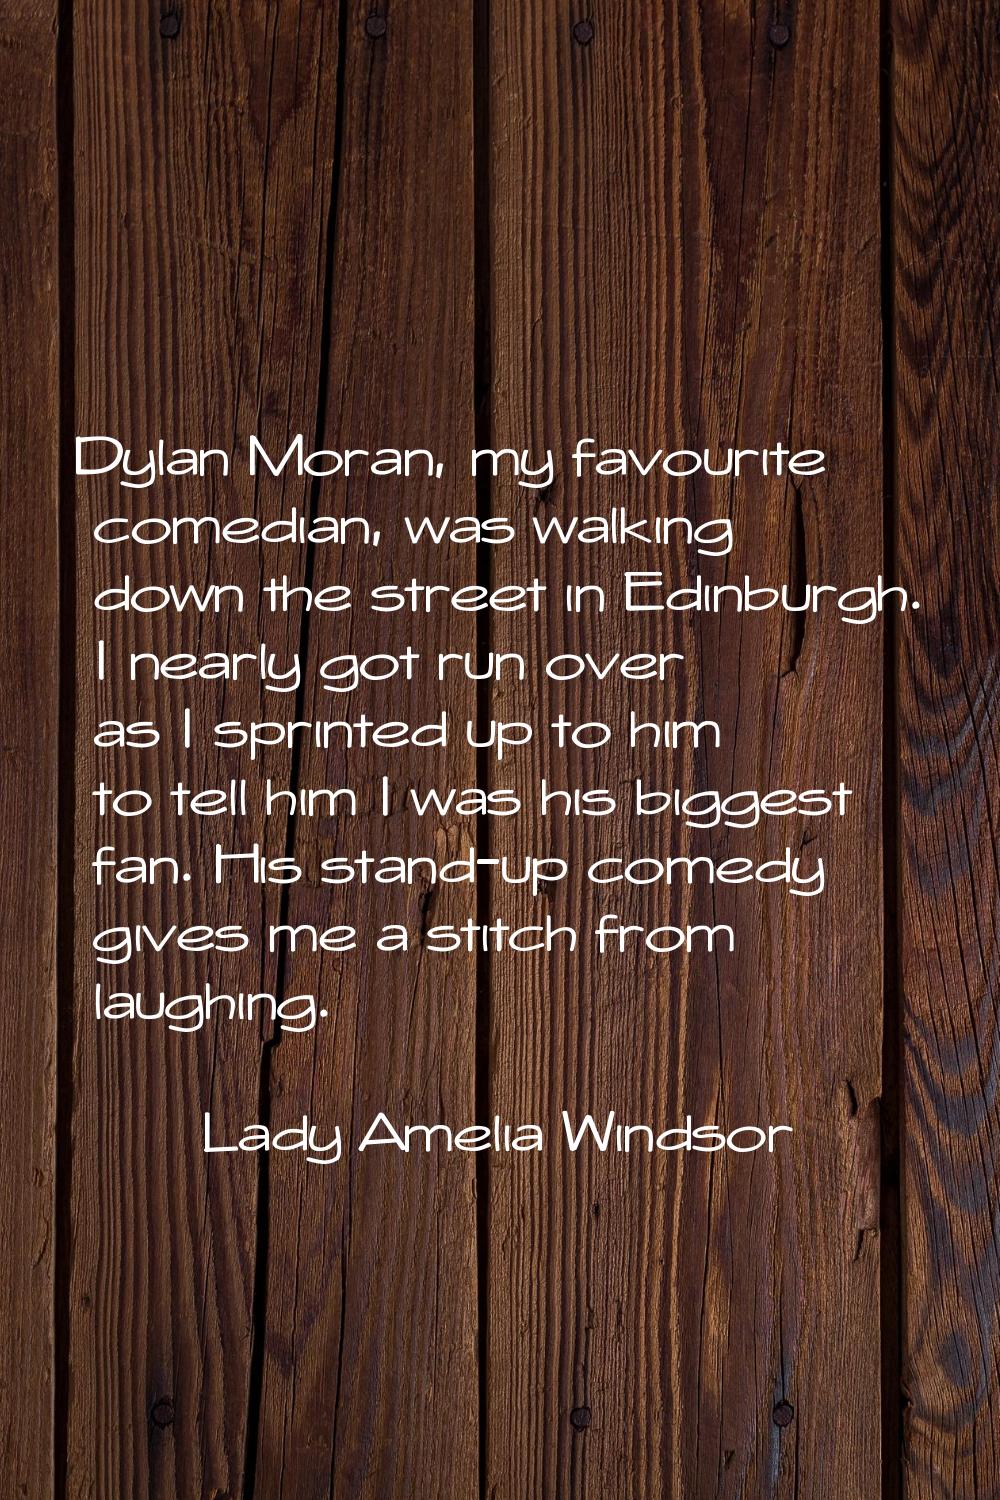 Dylan Moran, my favourite comedian, was walking down the street in Edinburgh. I nearly got run over